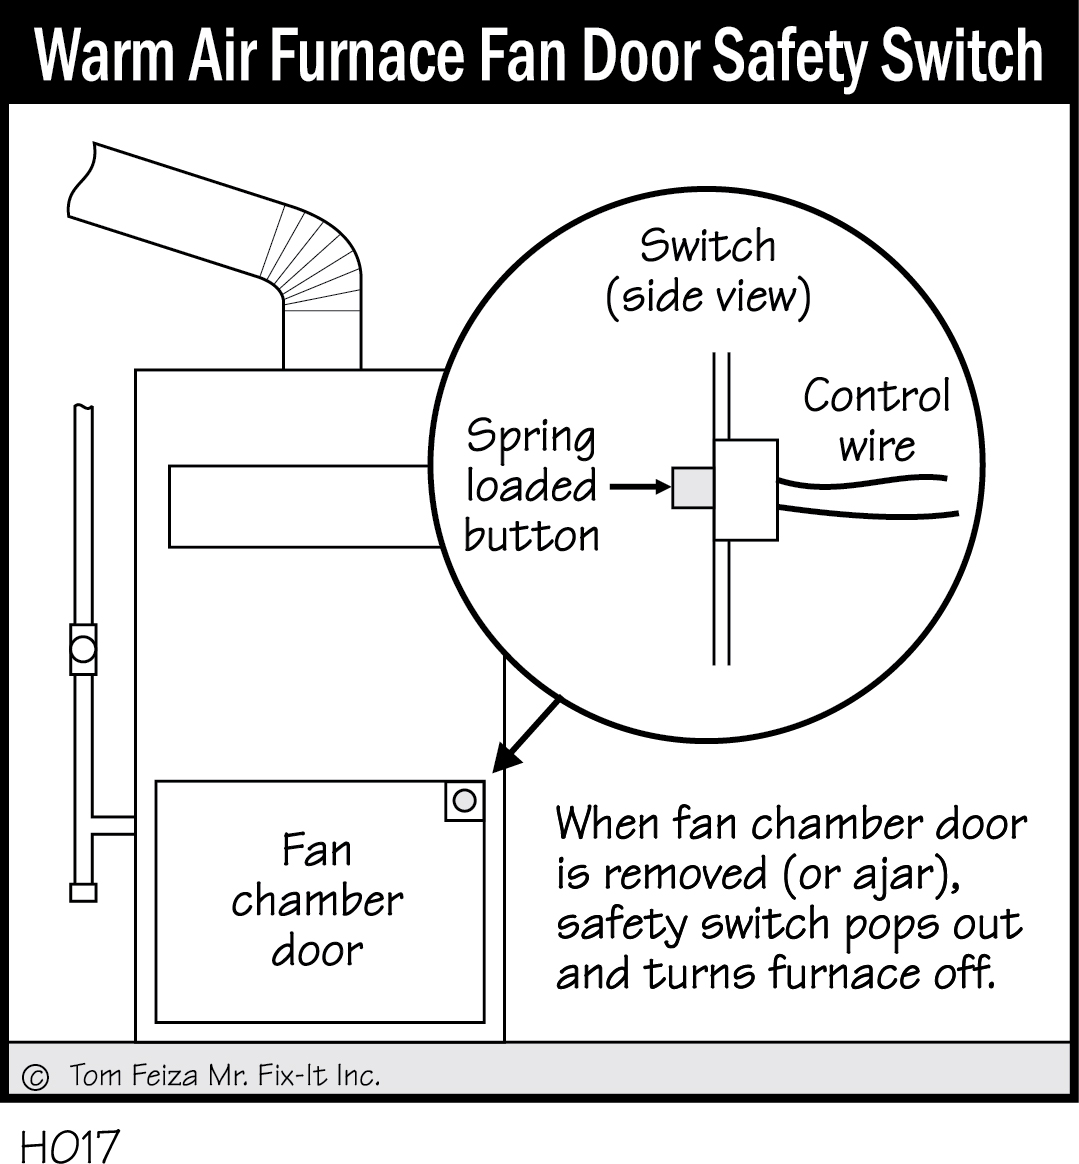 H017 - Warm Air Furnace Fan Door Safety Switch